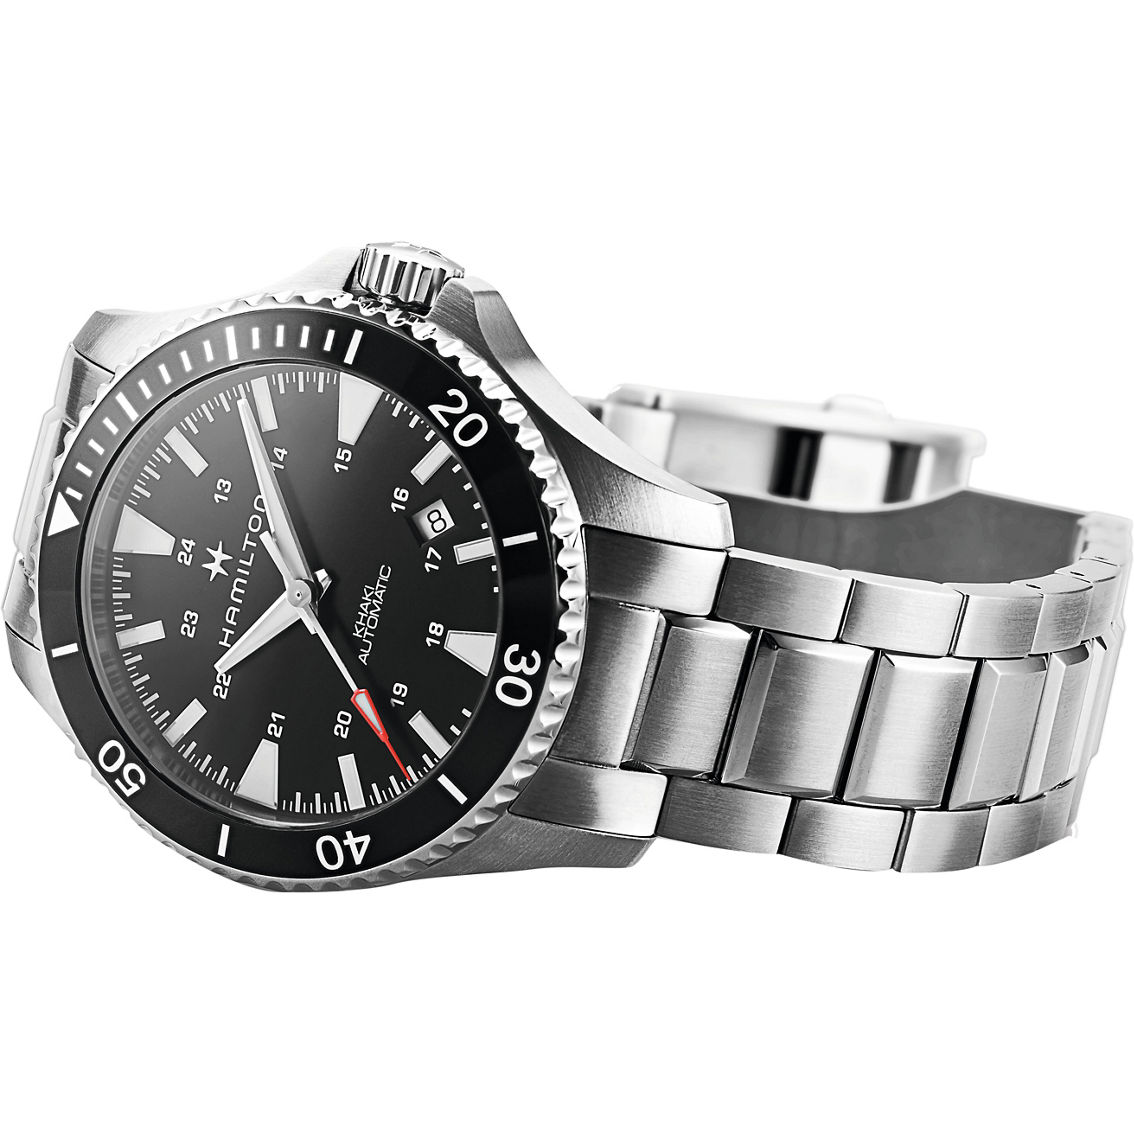 Hamilton Men's / Women's Khaki Navy Scuba Automatic Watch H82335131 - Image 2 of 2